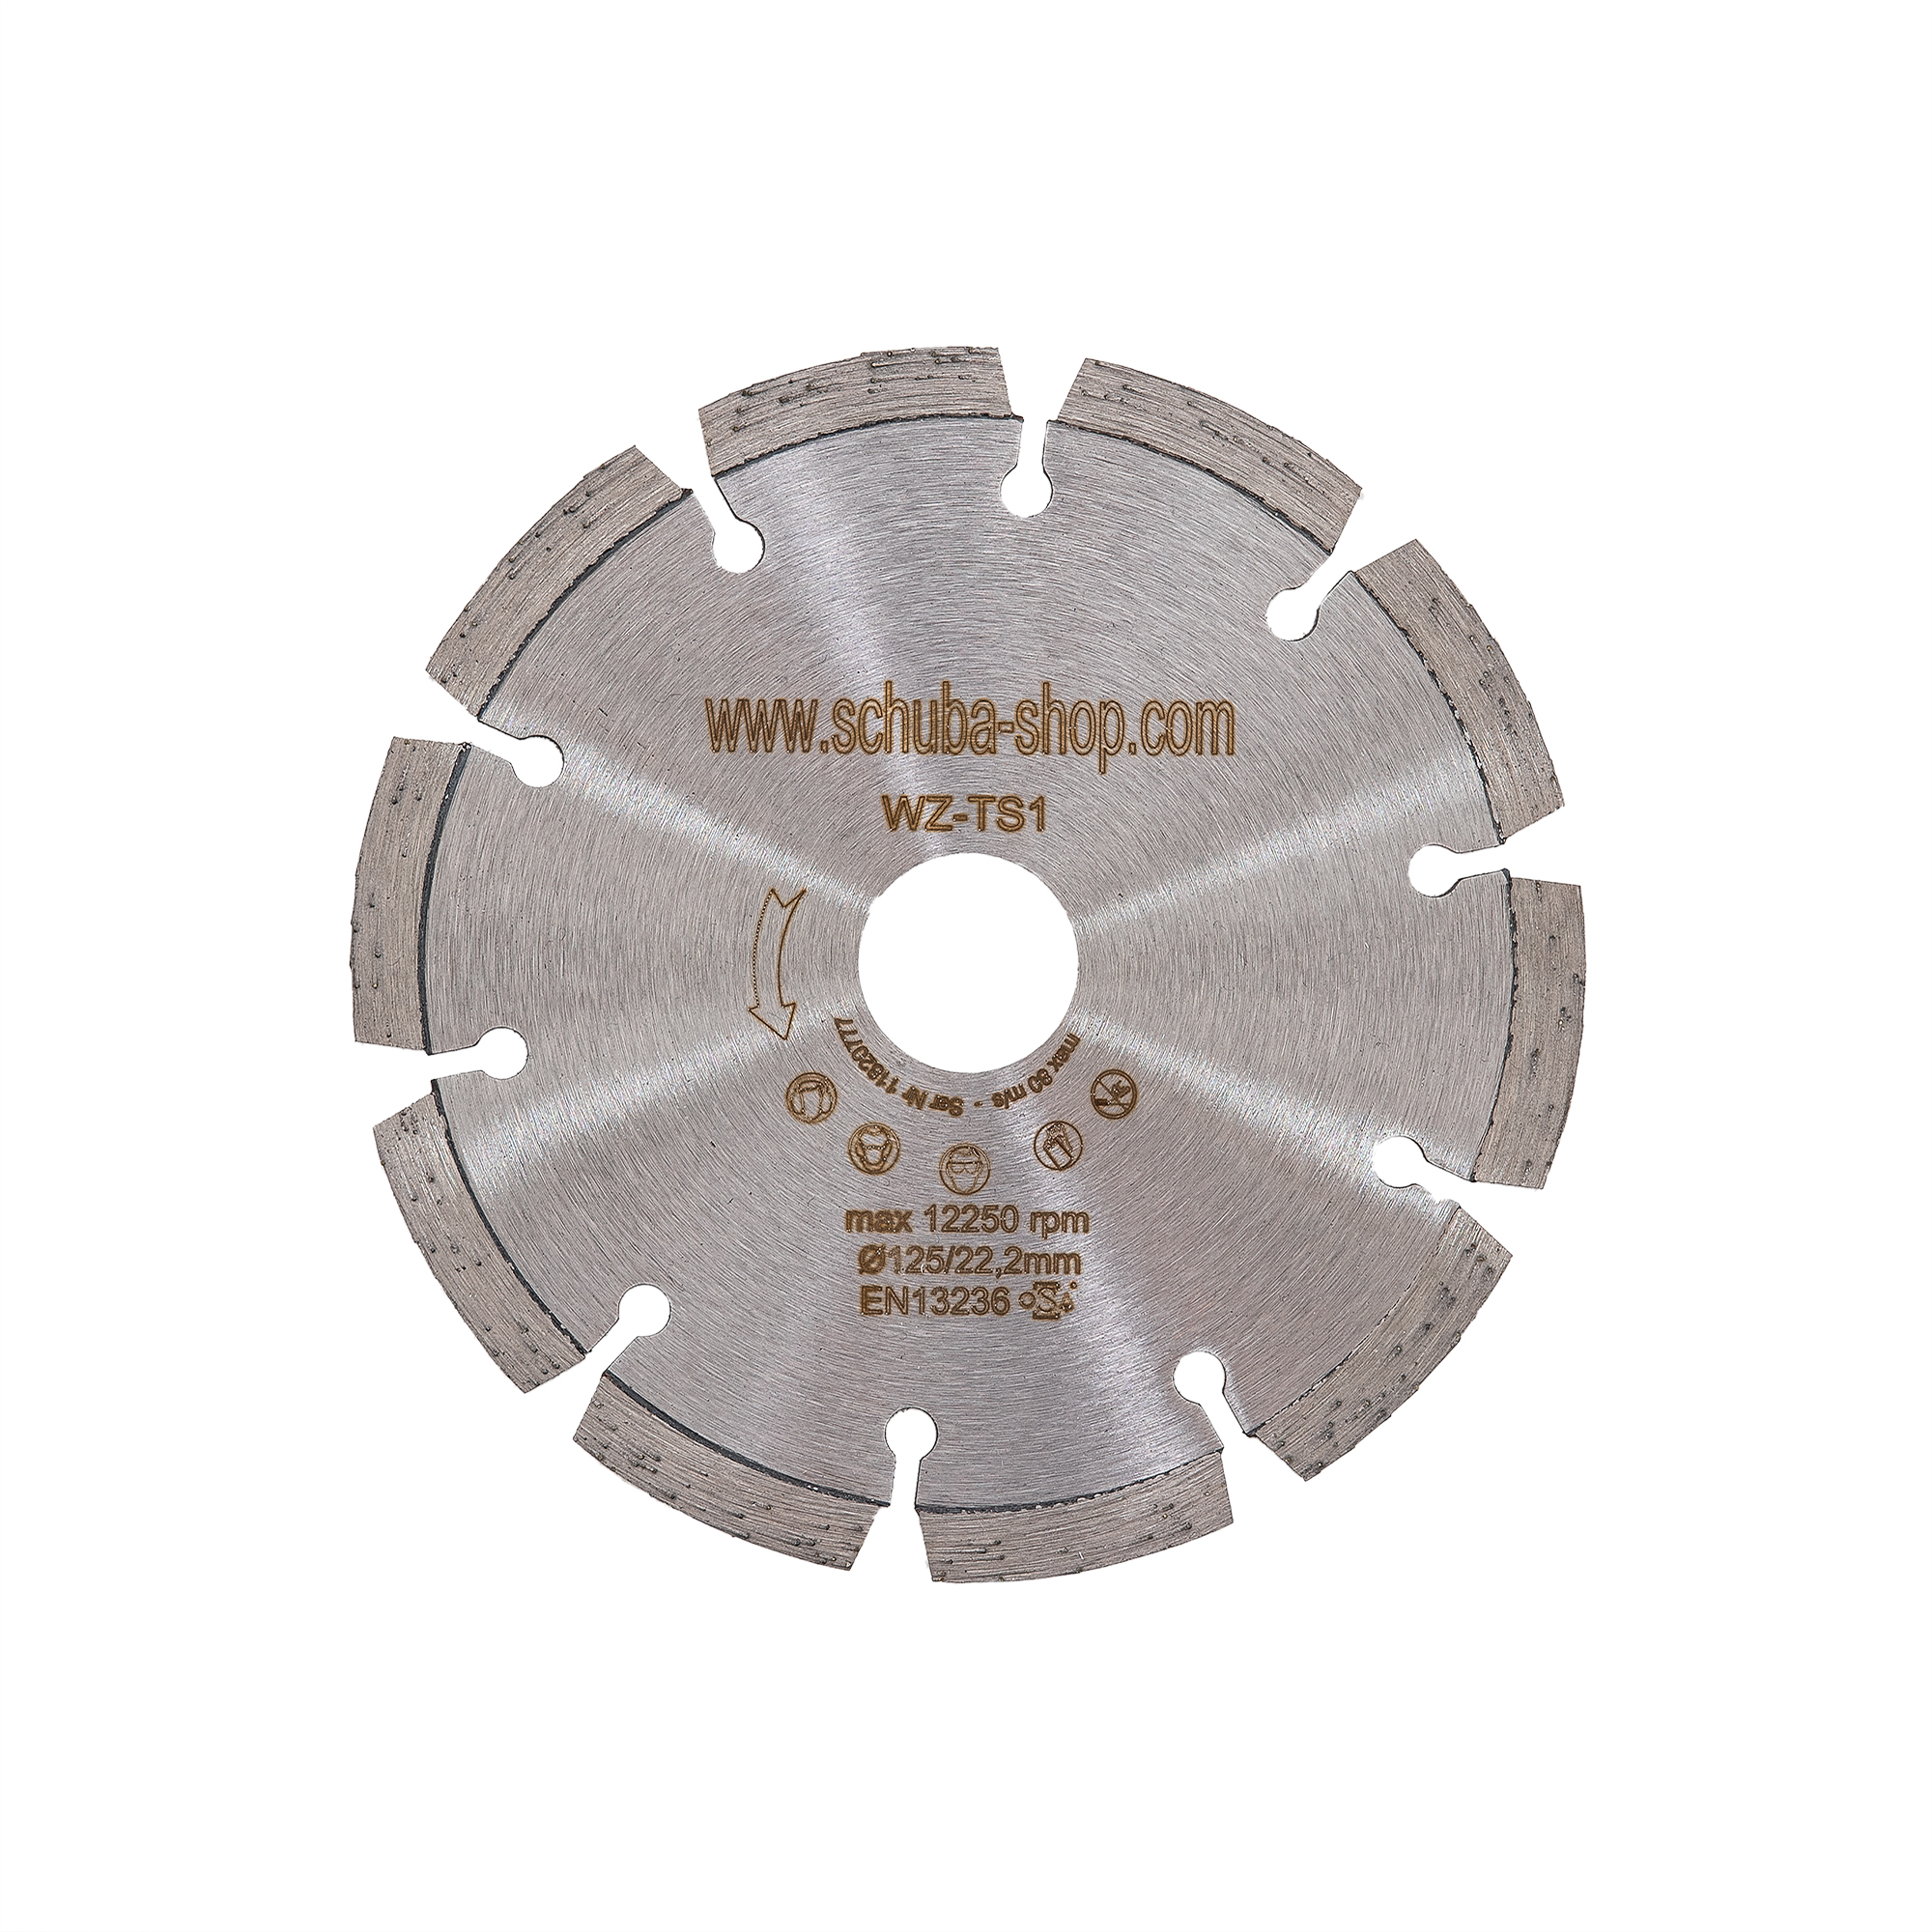 Diamanttrennscheibe Schuba®WZ-TS1, Durchmesser 125mm